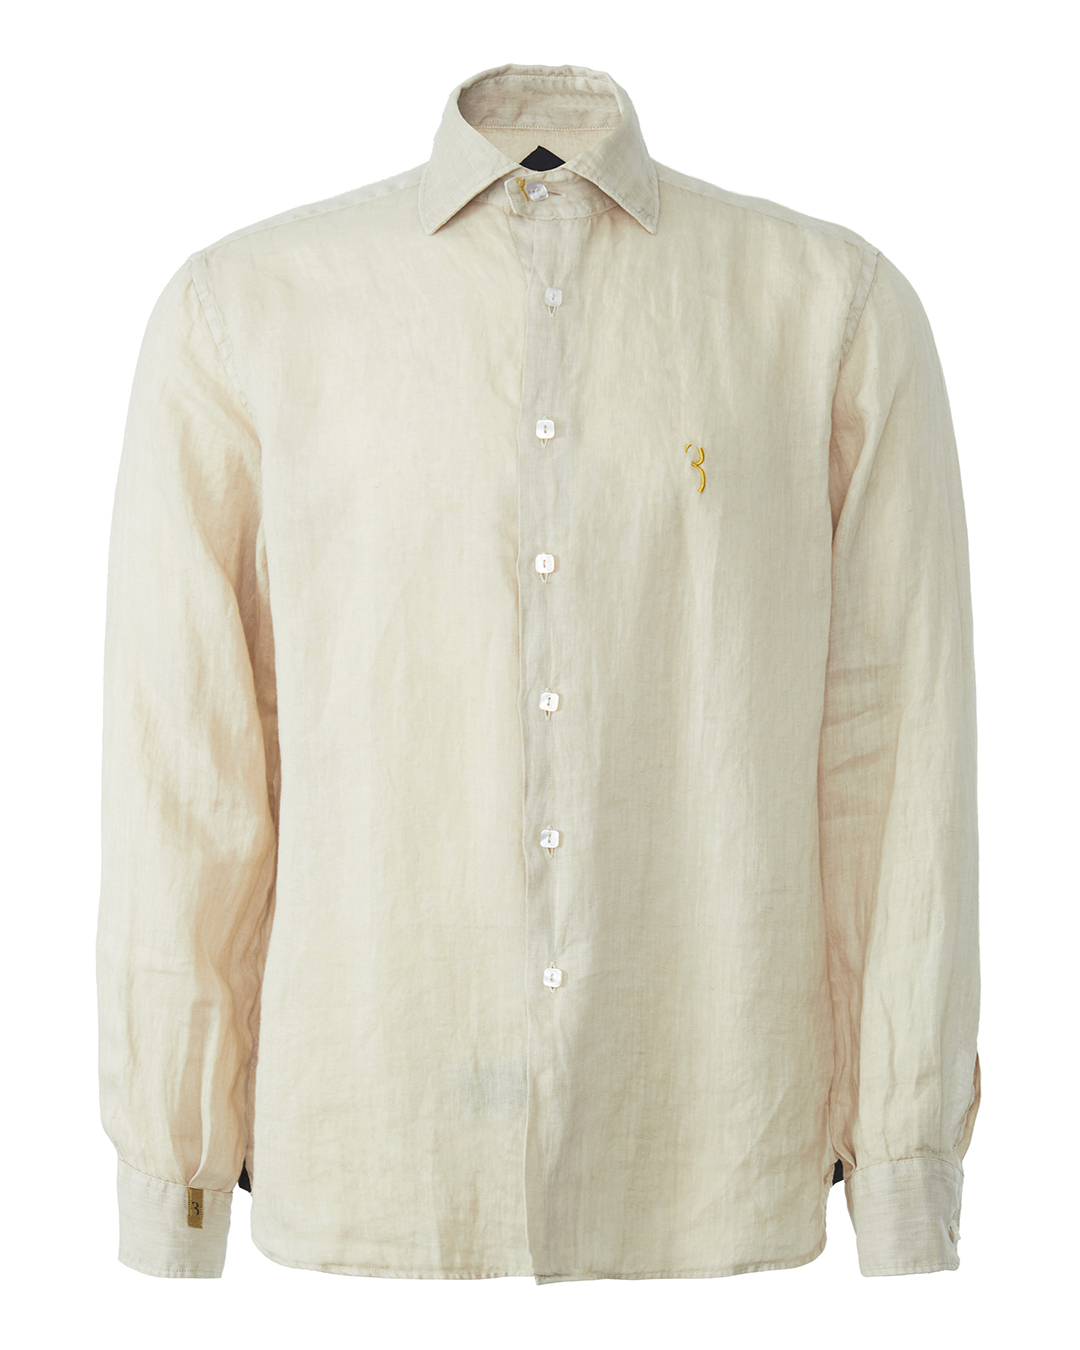 рубашка BILLIONAIRE puma porsche turbo legacy polo мужская рубашка поло хлопок 538235 01 оригинал